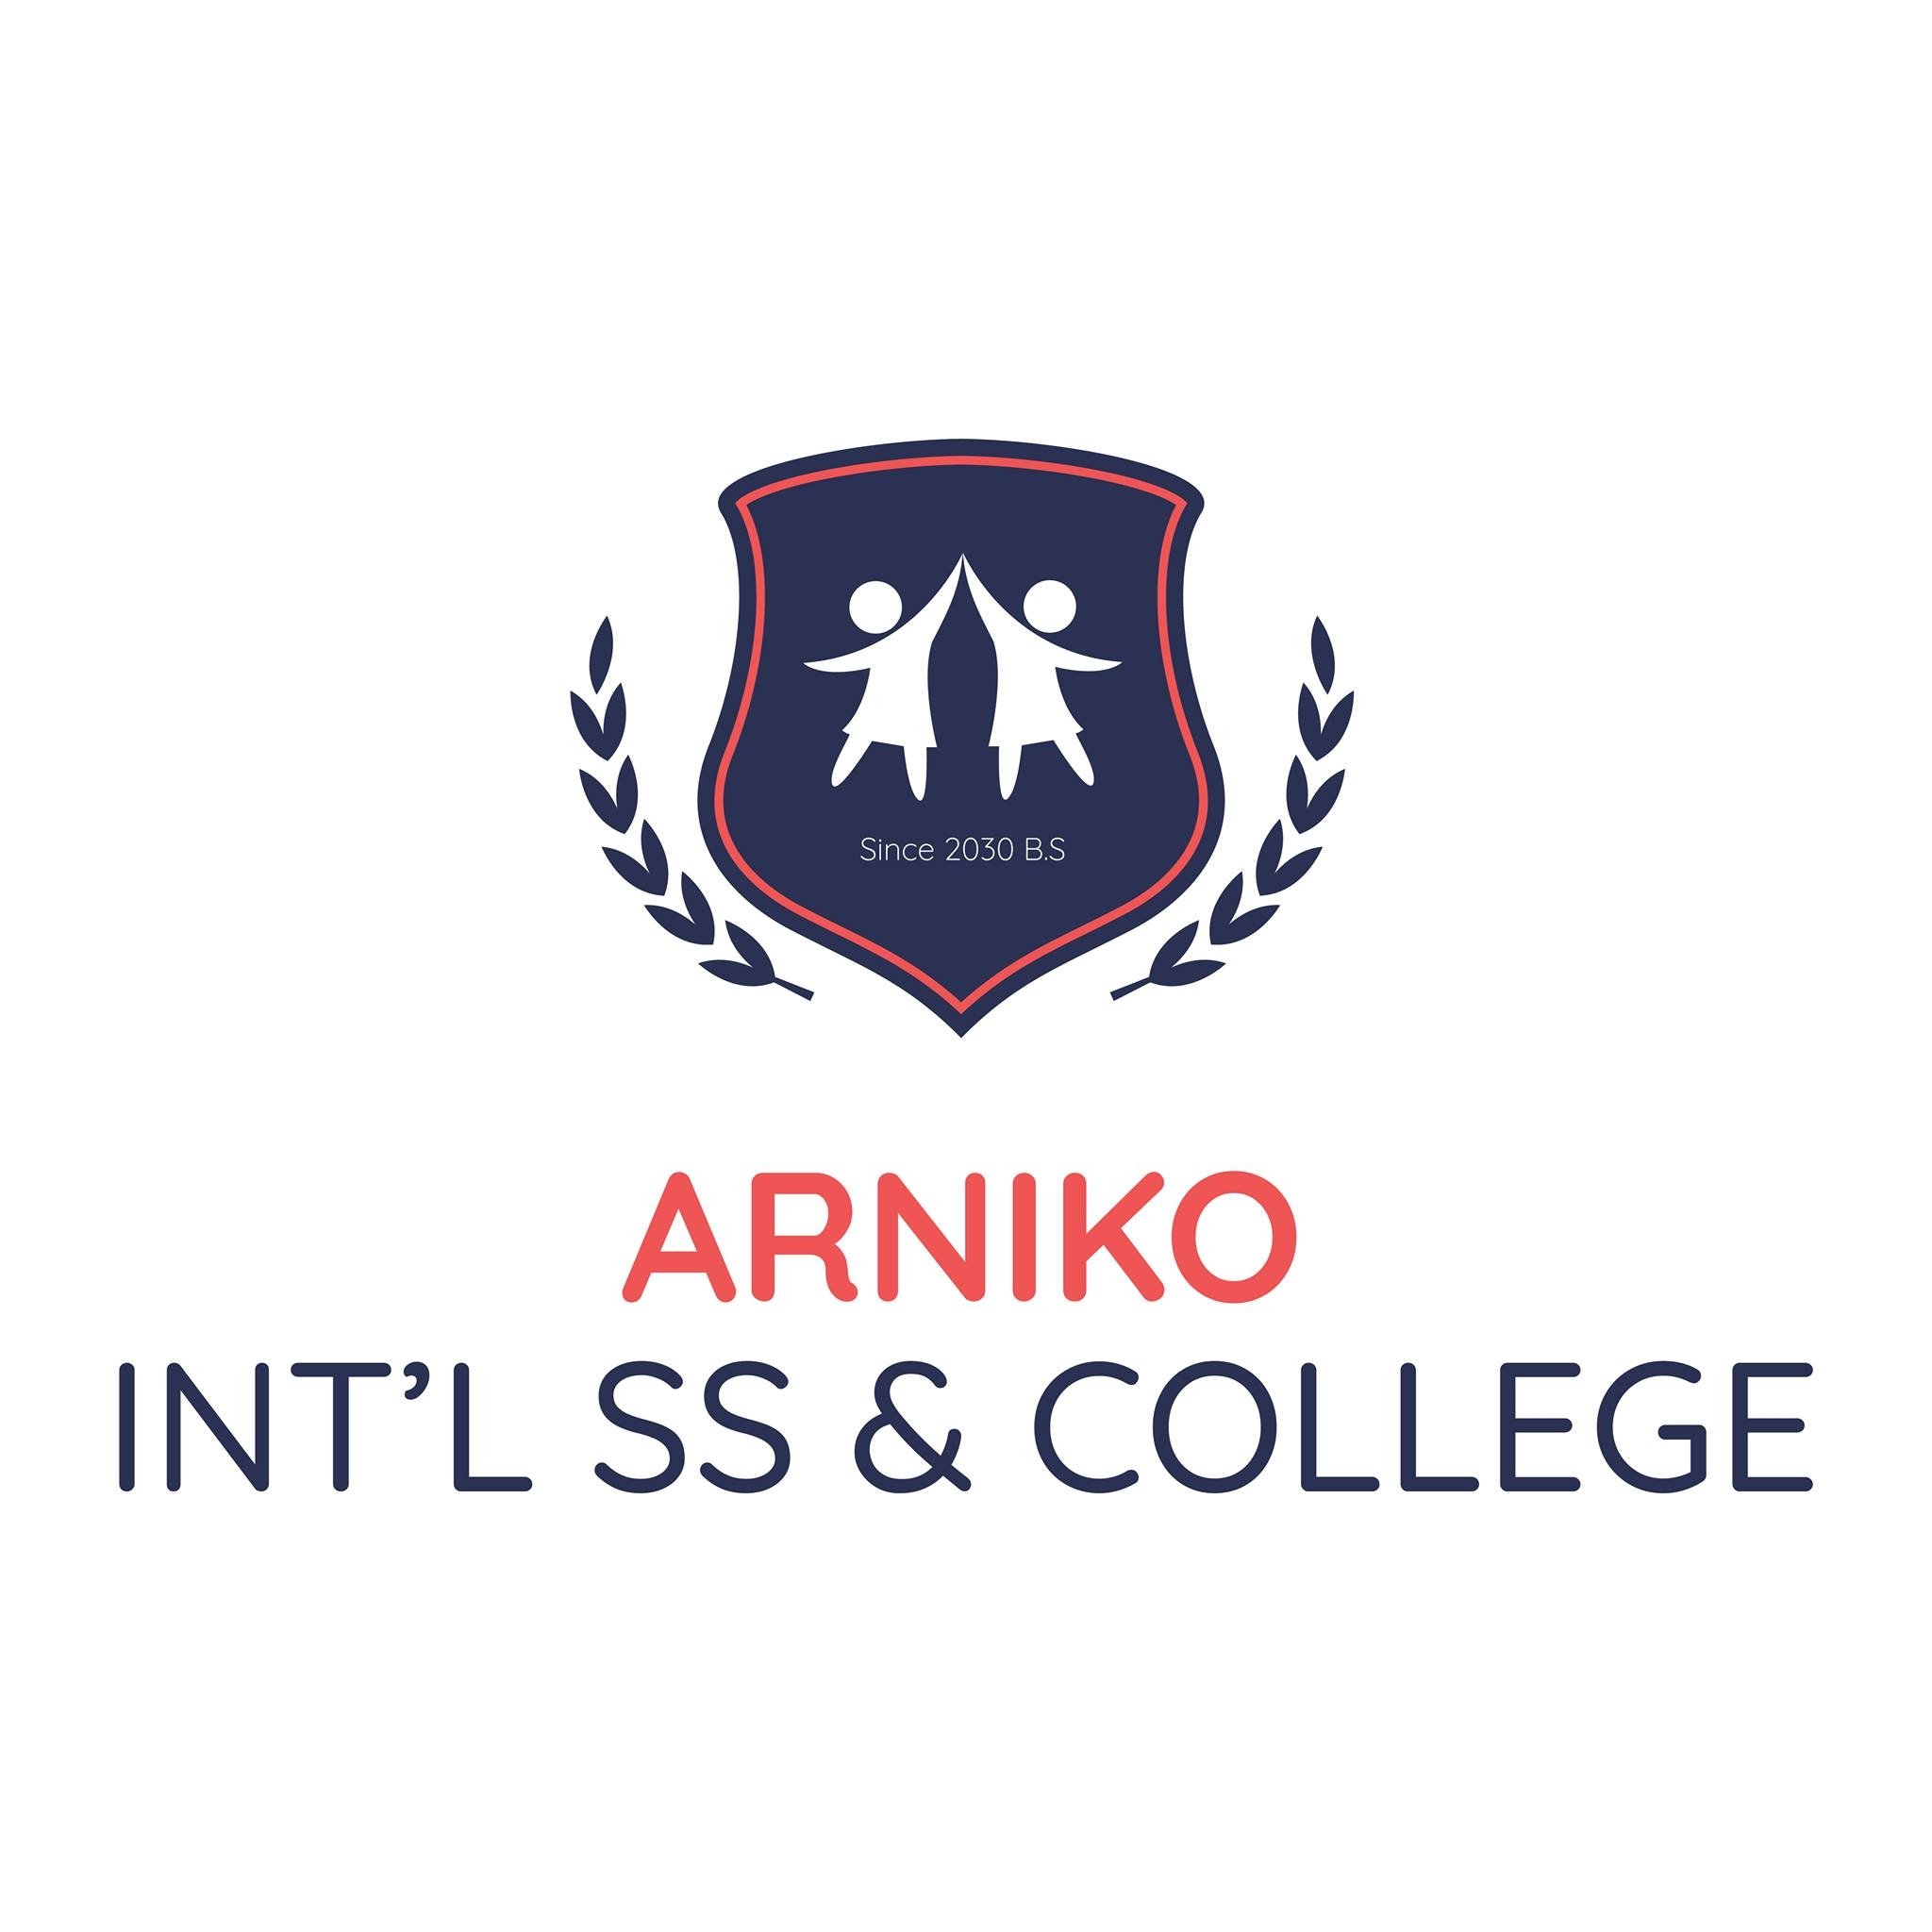 Araniko International Academy